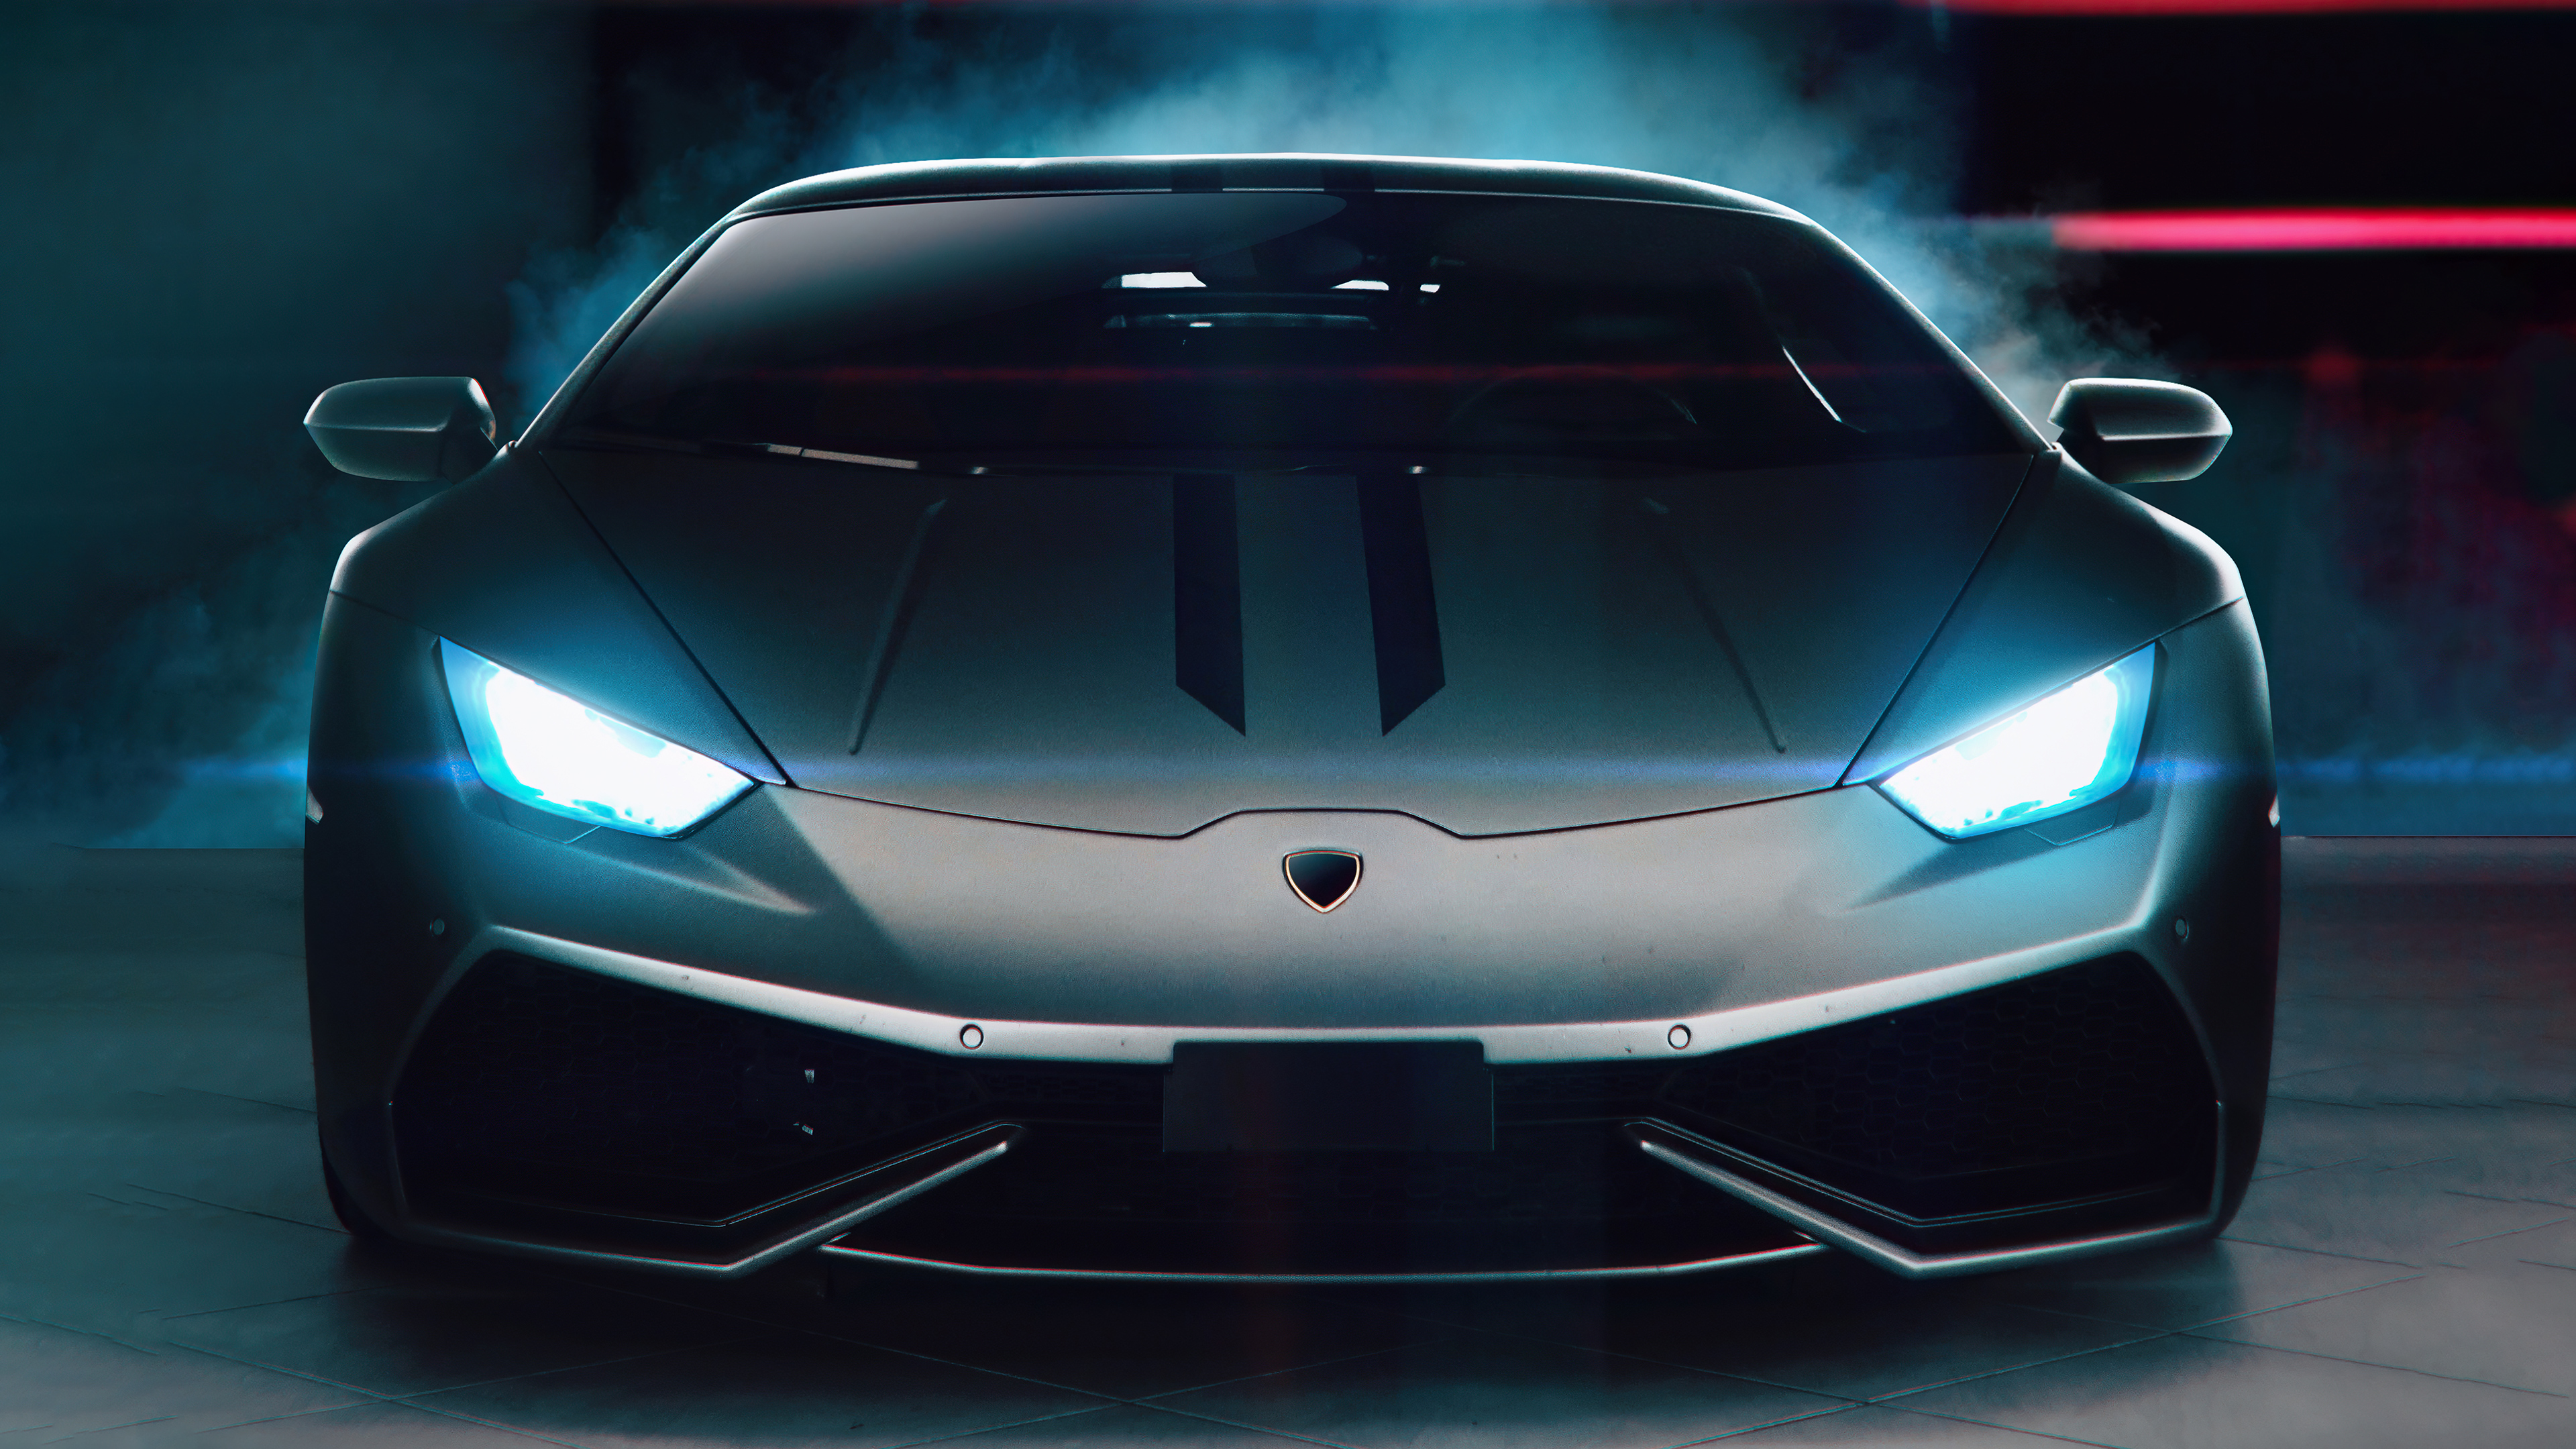 Free photo The digital art of the gray Lamborghini